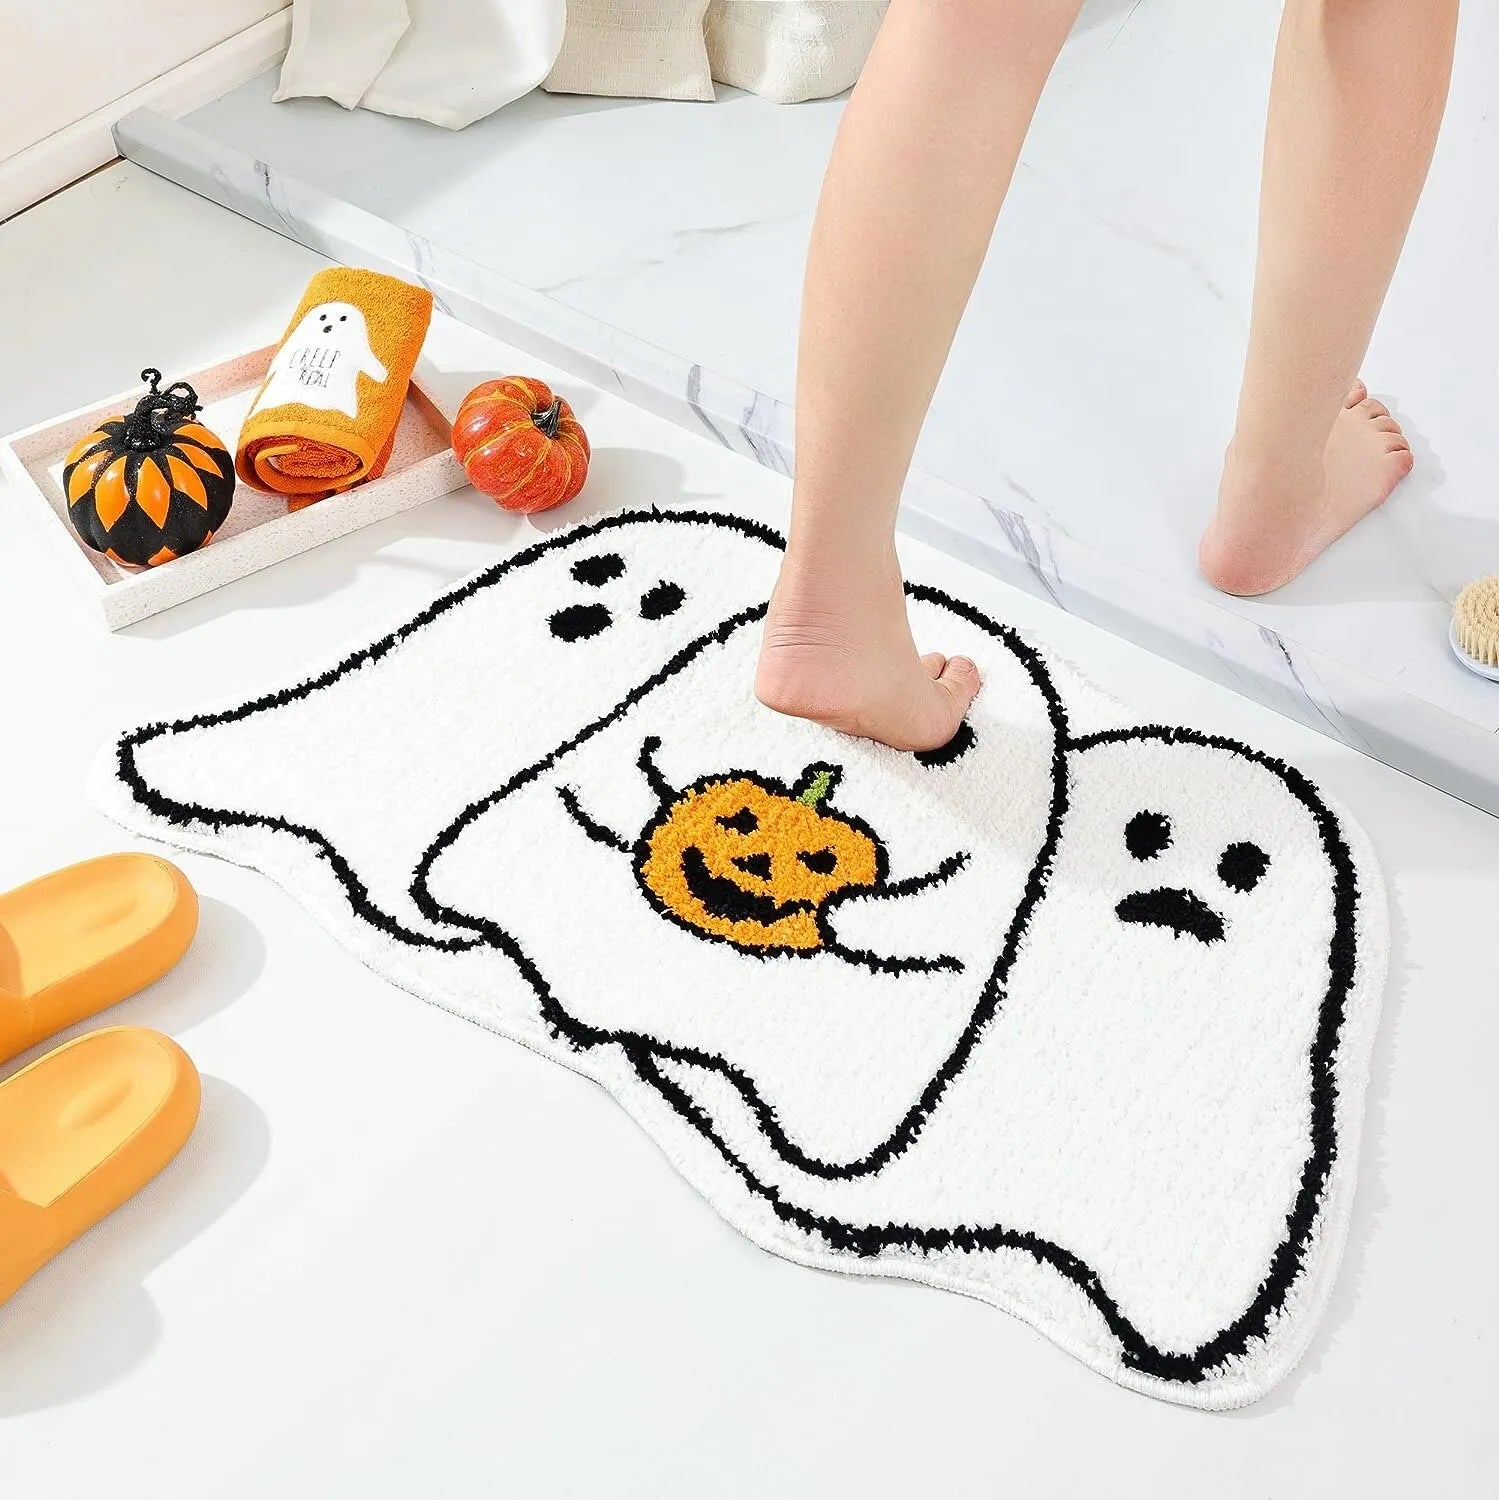 Ihomed Cute Ghost Rug, Fun Home Decoration, Pumpkin Rug, Ghost Accent Rug, Spooky House Decor,Halloween Gift Ideas